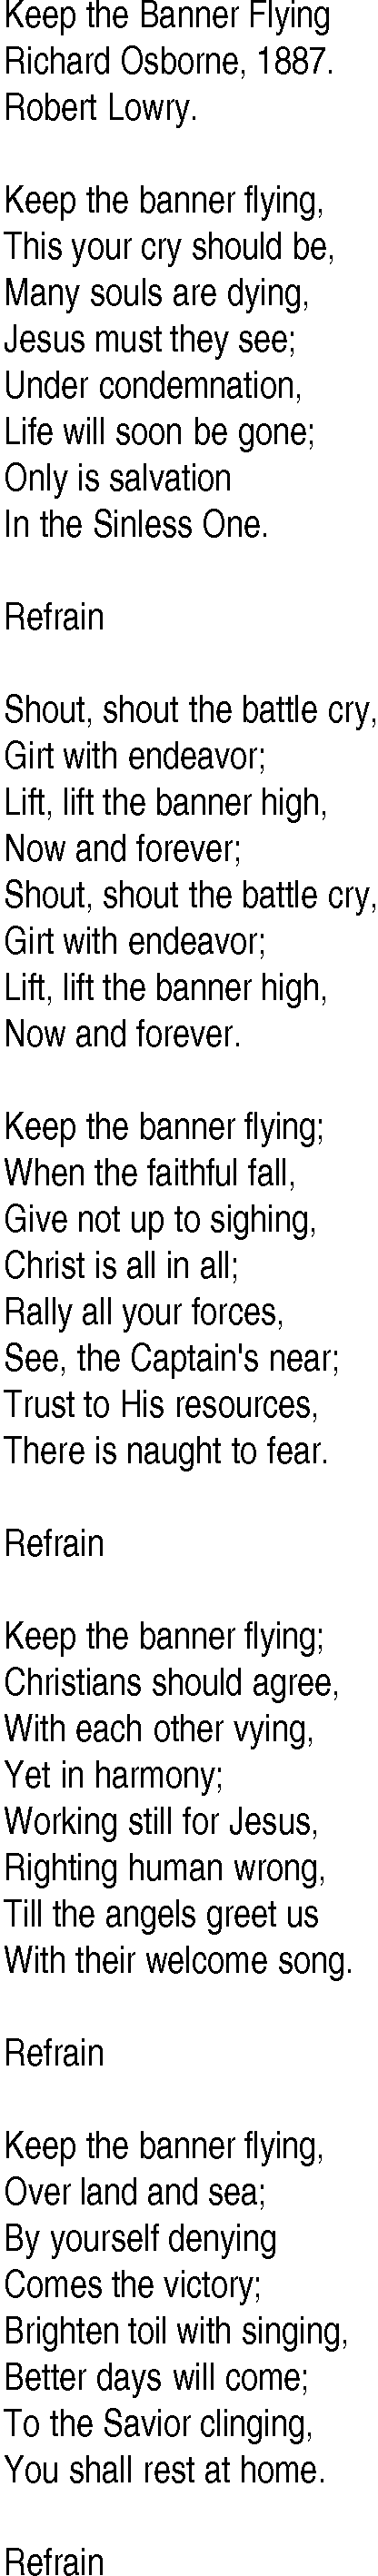 Hymn and Gospel Song: Keep the Banner Flying by Richard Osborne lyrics